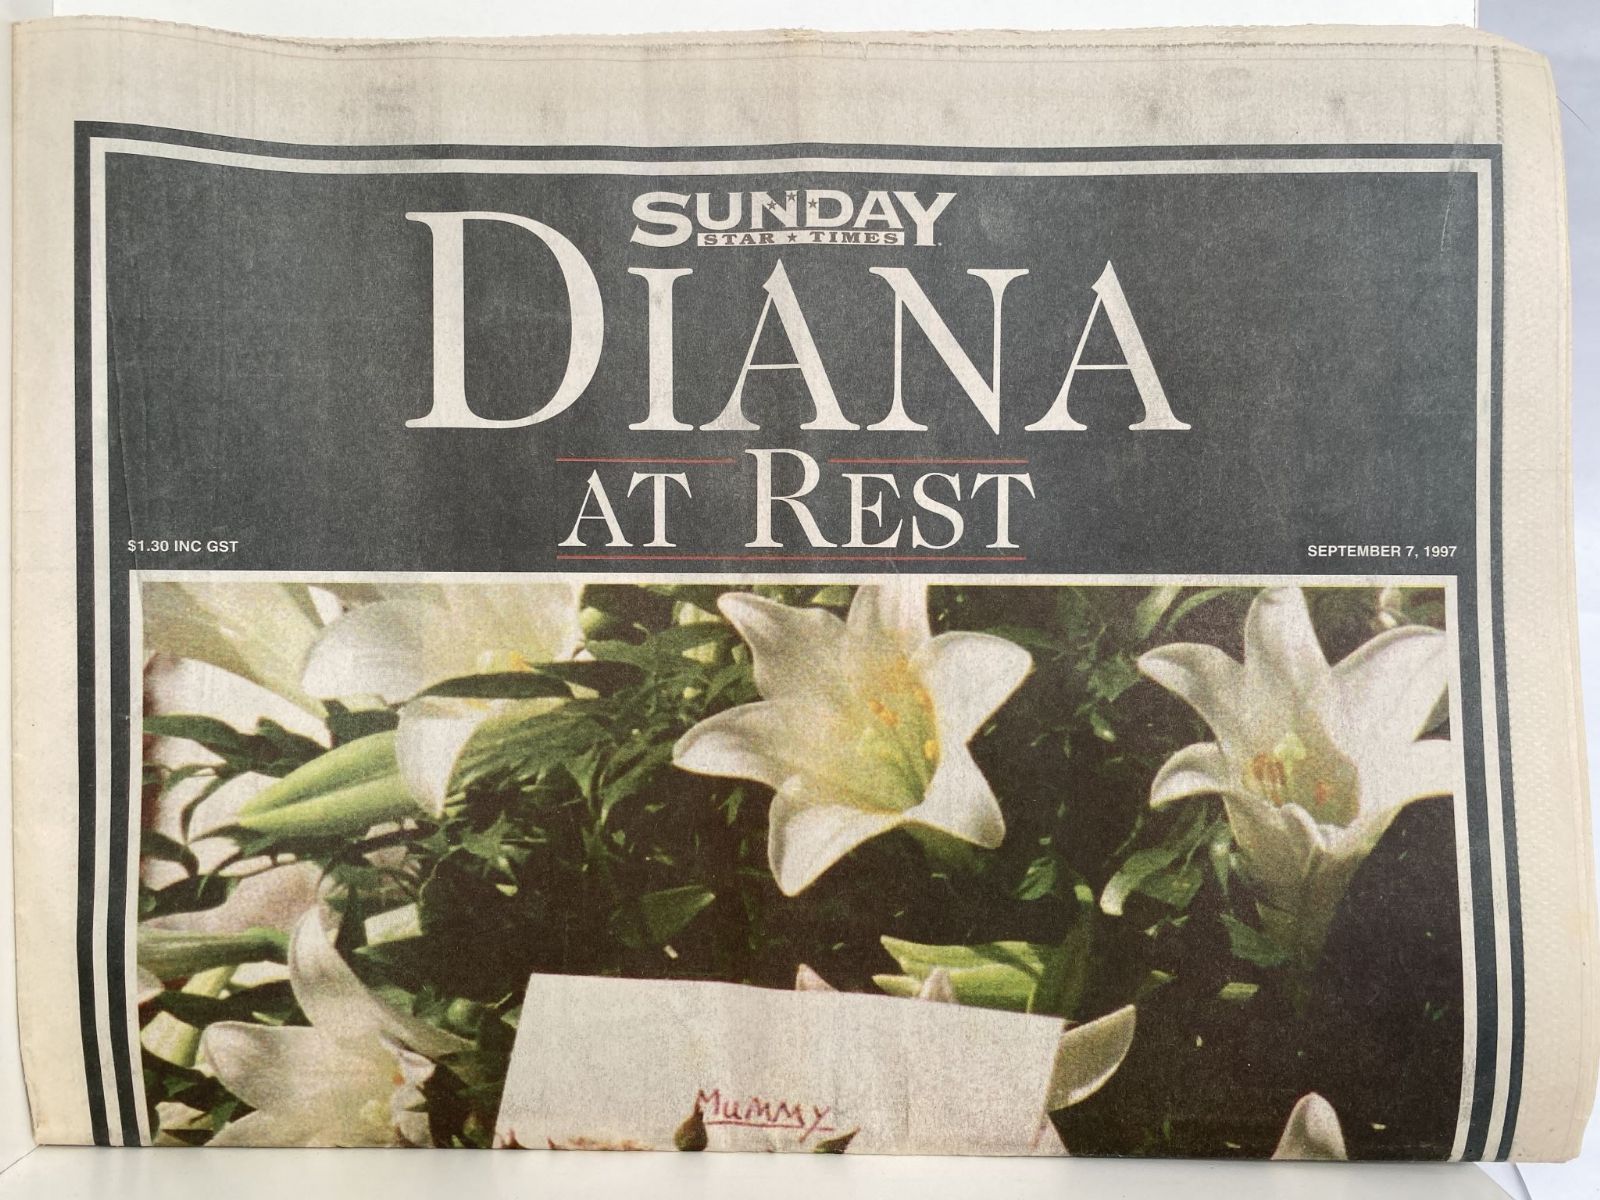 OLD NEWSPAPER: Sunday Star Times, 7 September 1997 - Death of Princess Diana